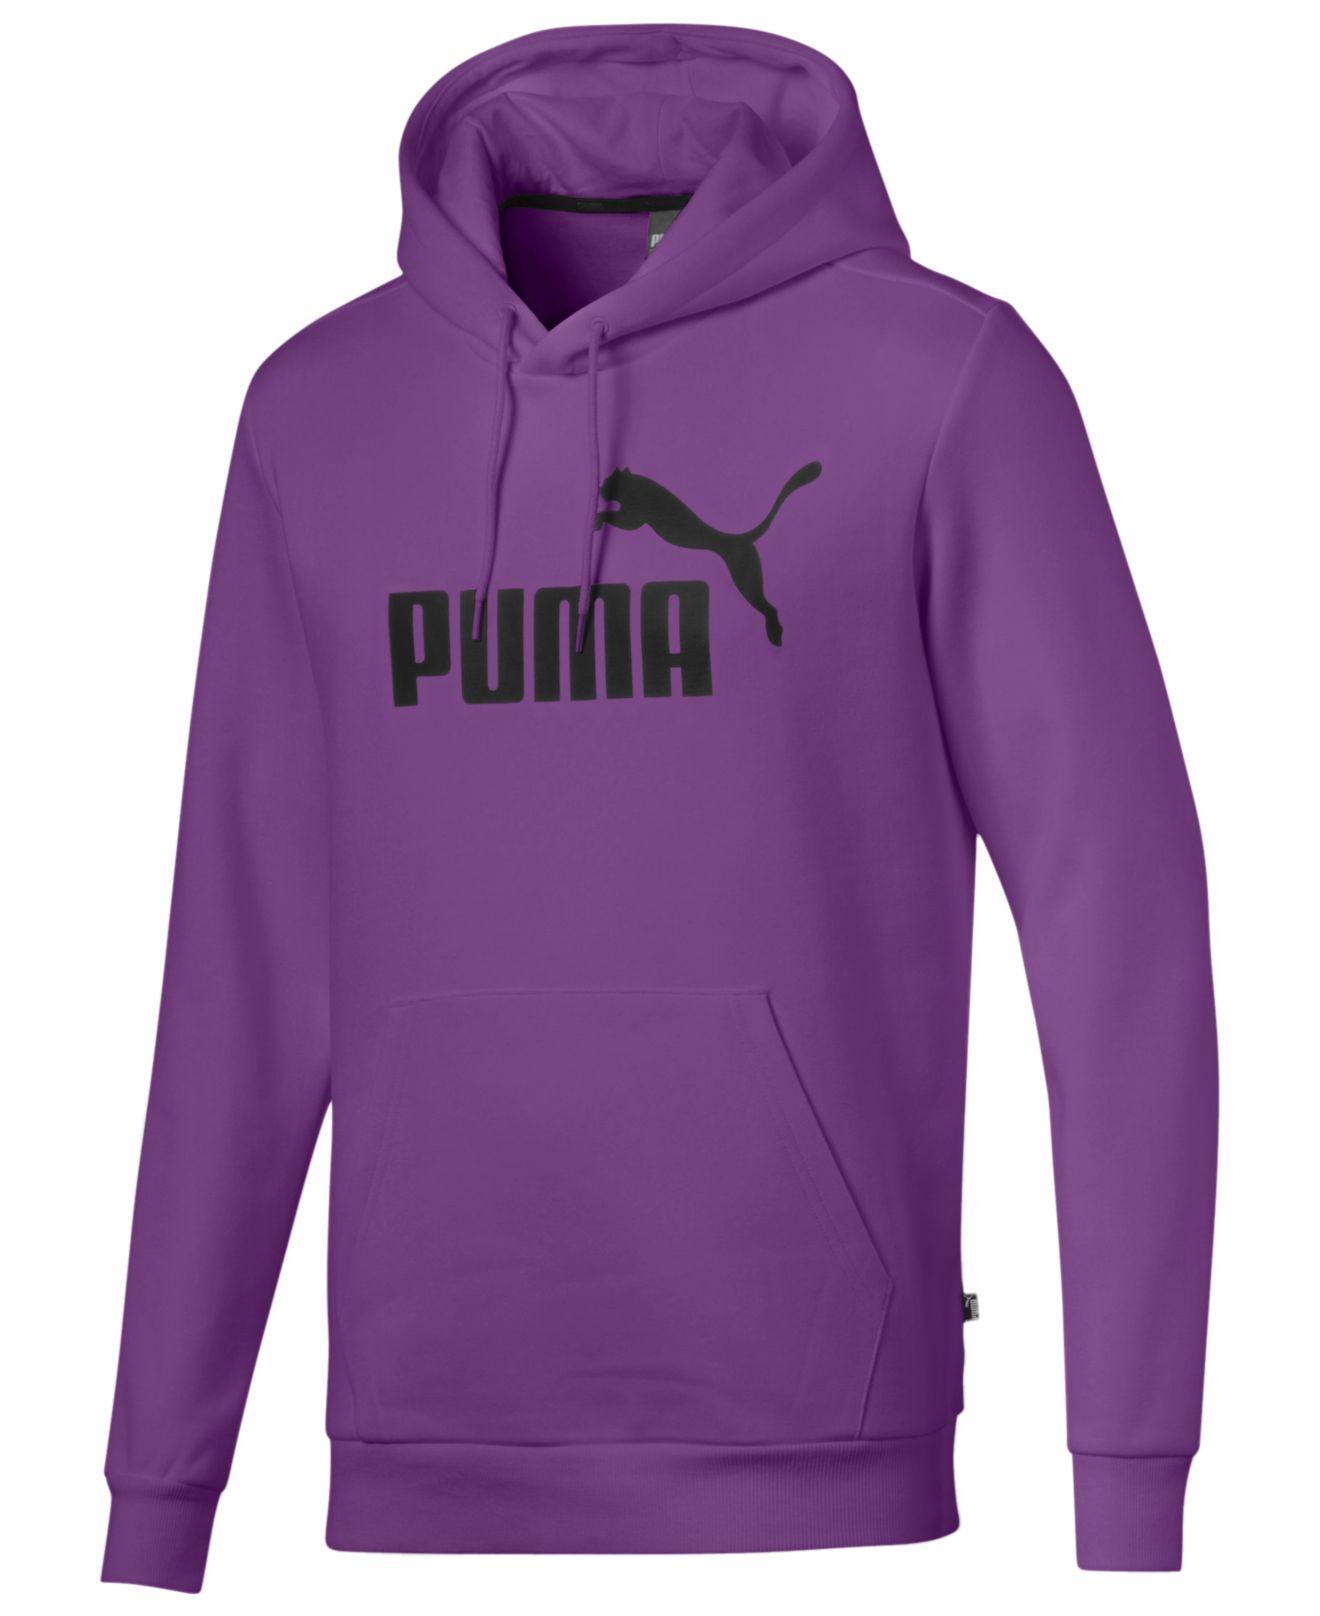 PUMA Fleece Essential Logo Hoodie in Purple for Men - Lyst